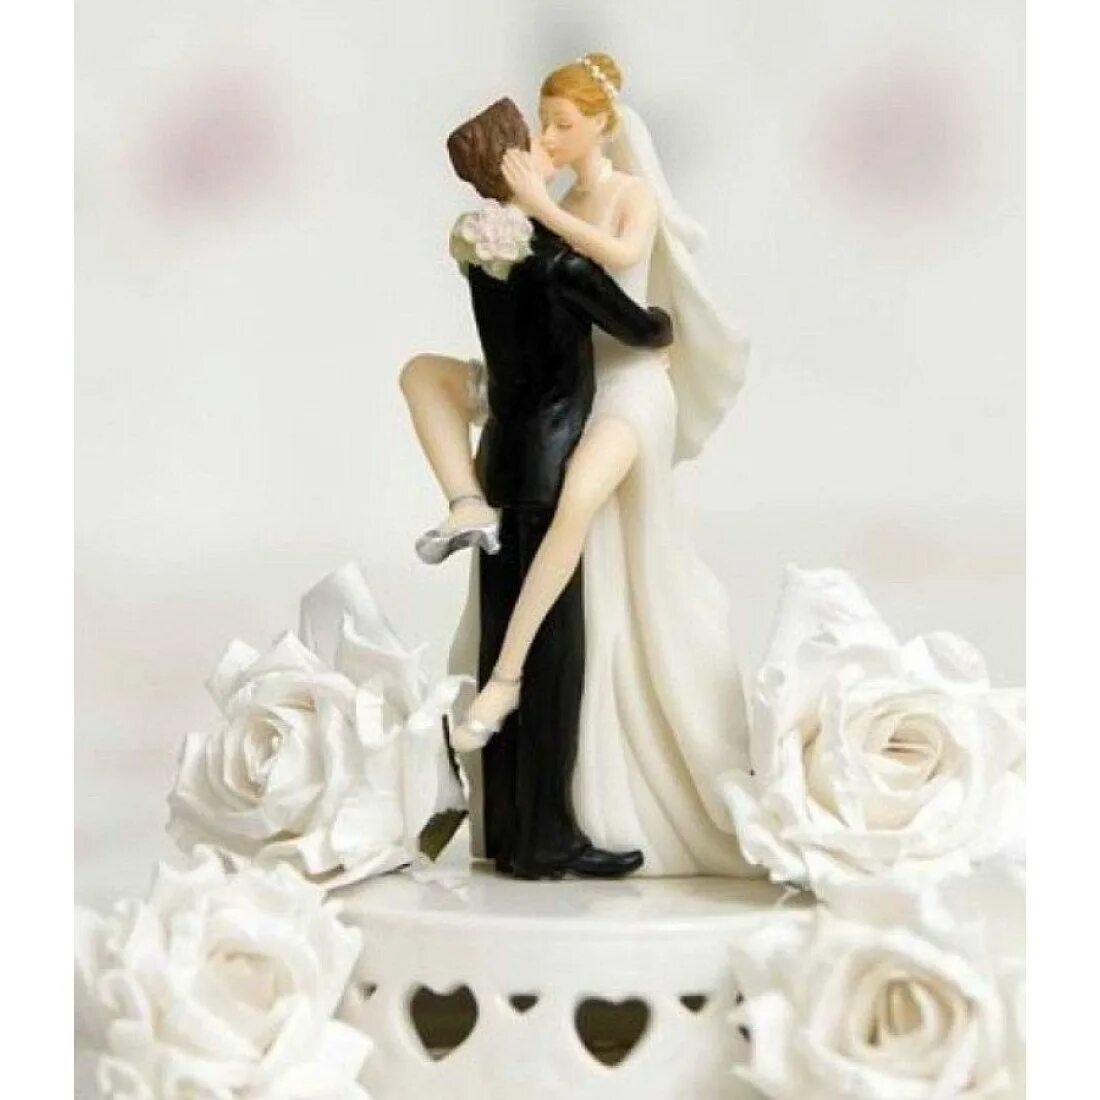 Жених невеста на торт. Фигурки на свадебный торт. Торт с фигурками. Свадебные фигурки жениха и невесты. Торт жених и невеста.